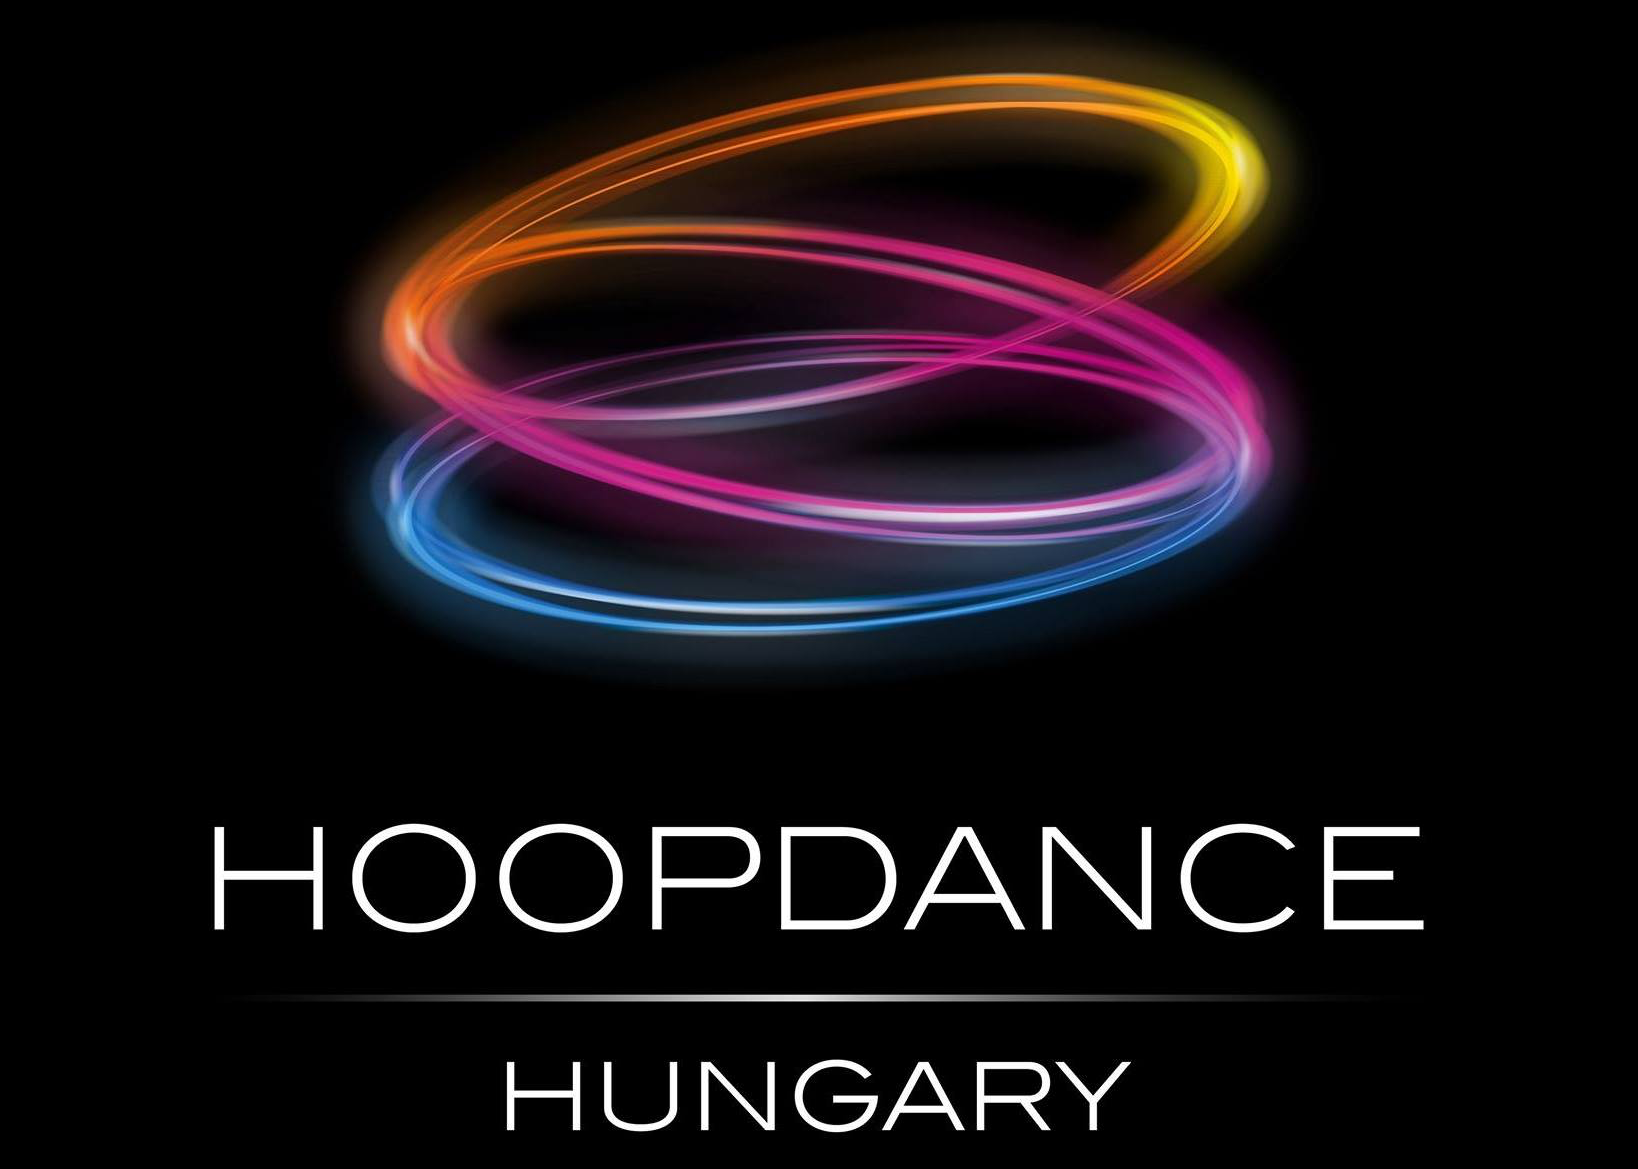 Hoopdance Hungary logo